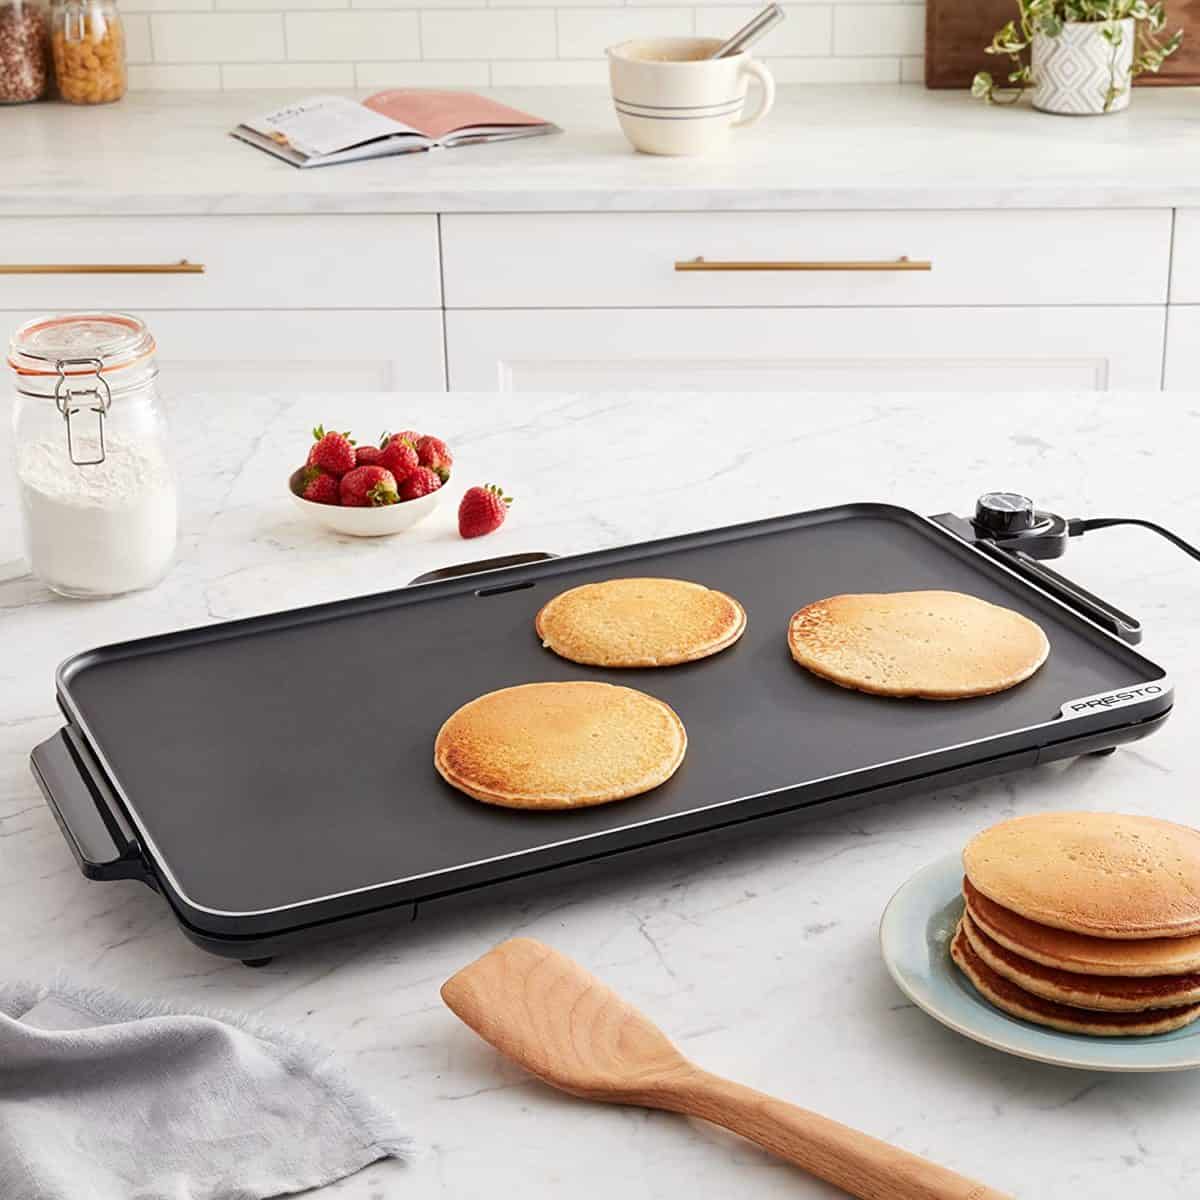 Best budget electric teppanyaki grill- Presto 07072 Slimline Griddle with pancakes